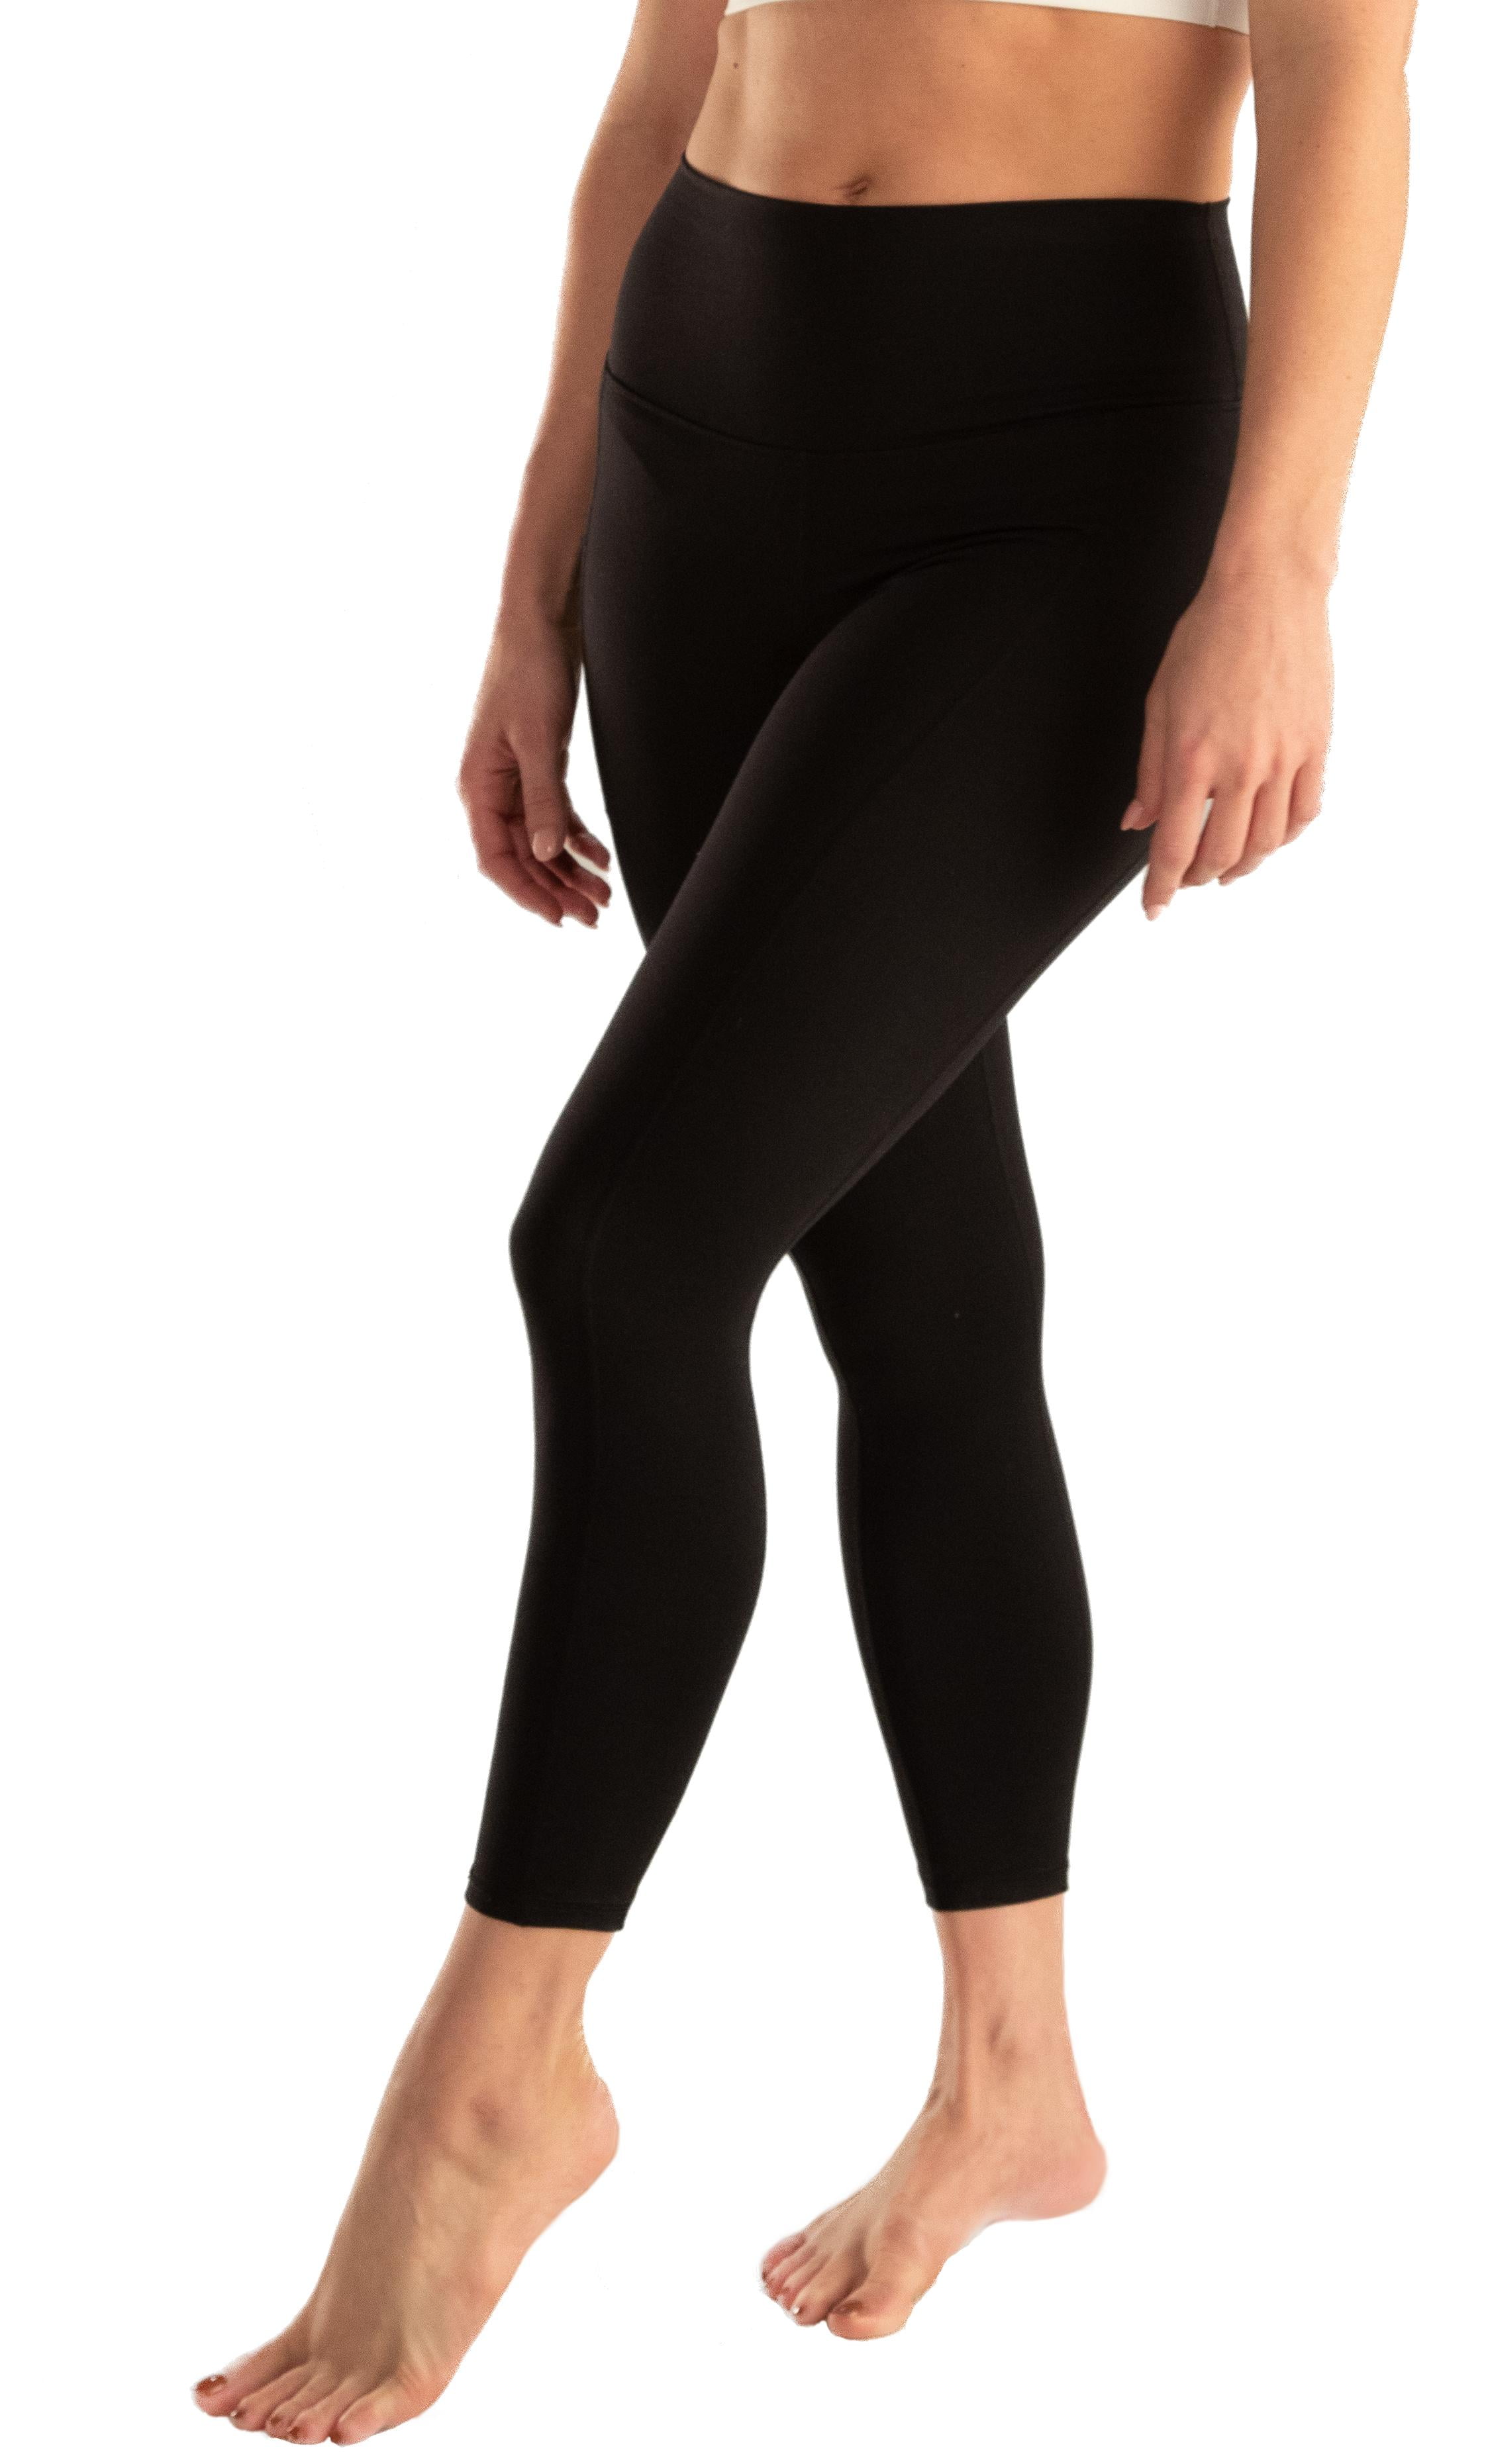 Lumana Leakproof Yoga Pant Leggings, 22 Inseam, Black, 3X, Single